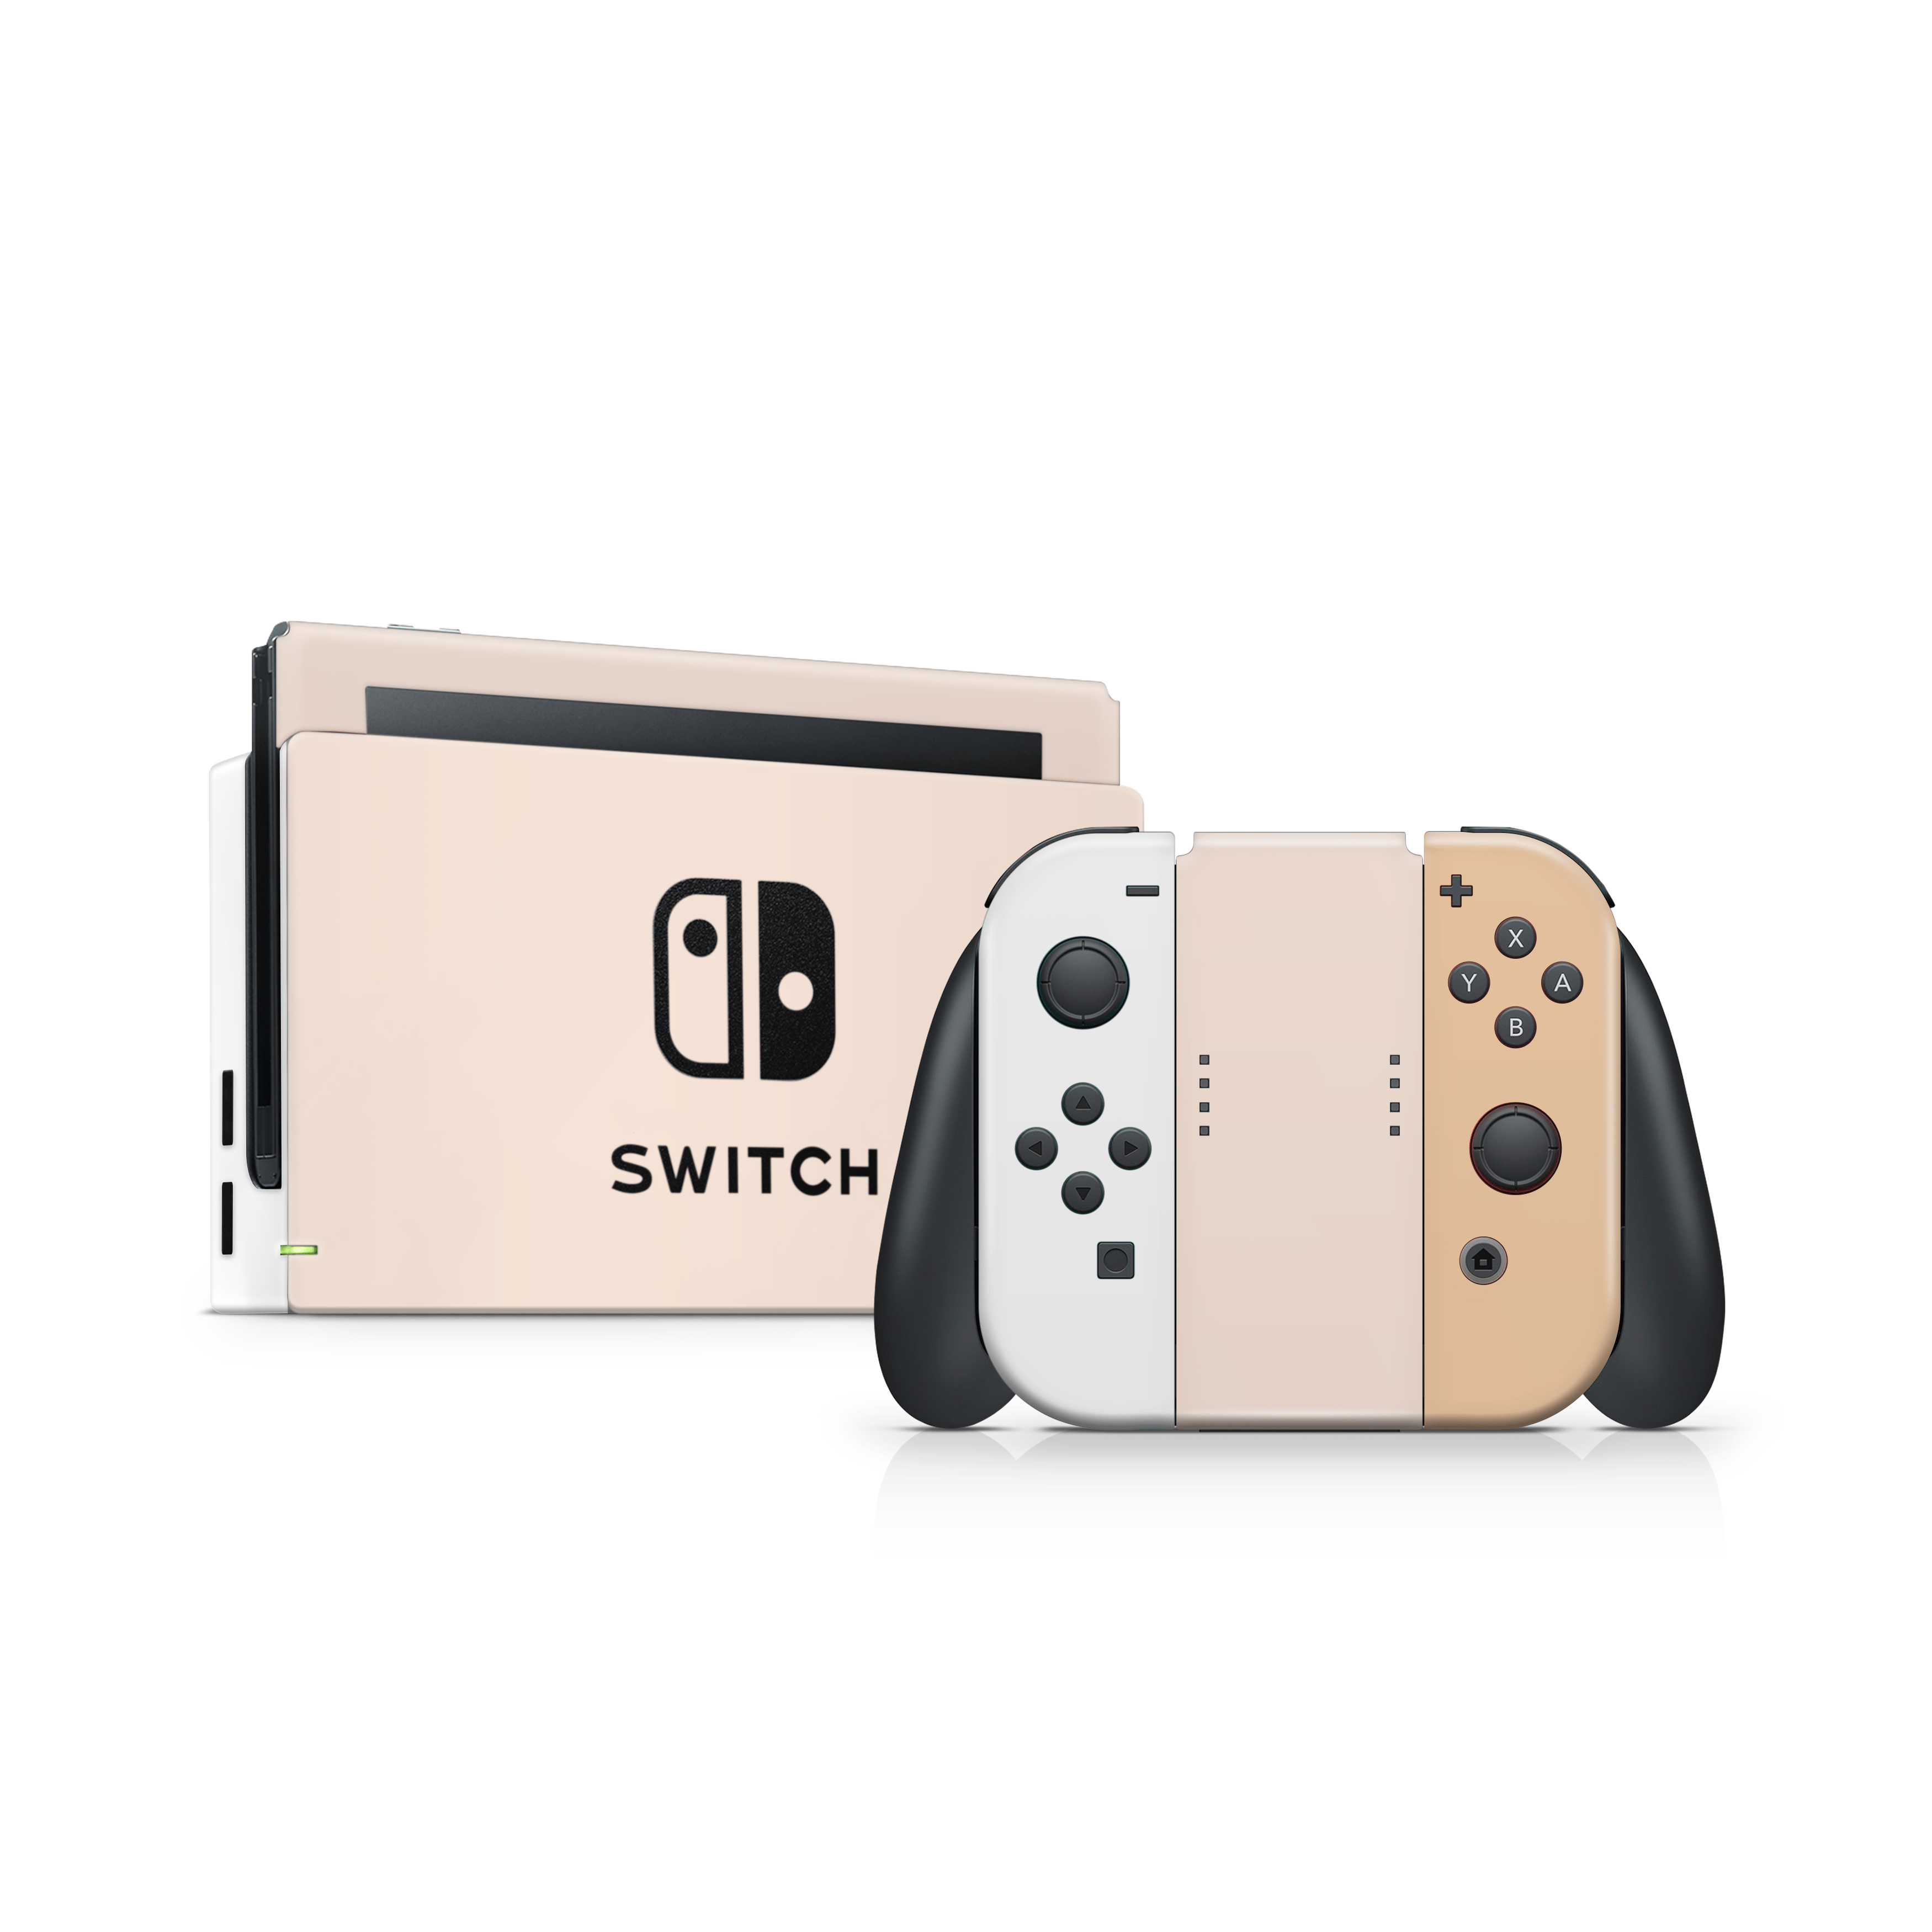 Creme Beige Nintendo Switch Skin